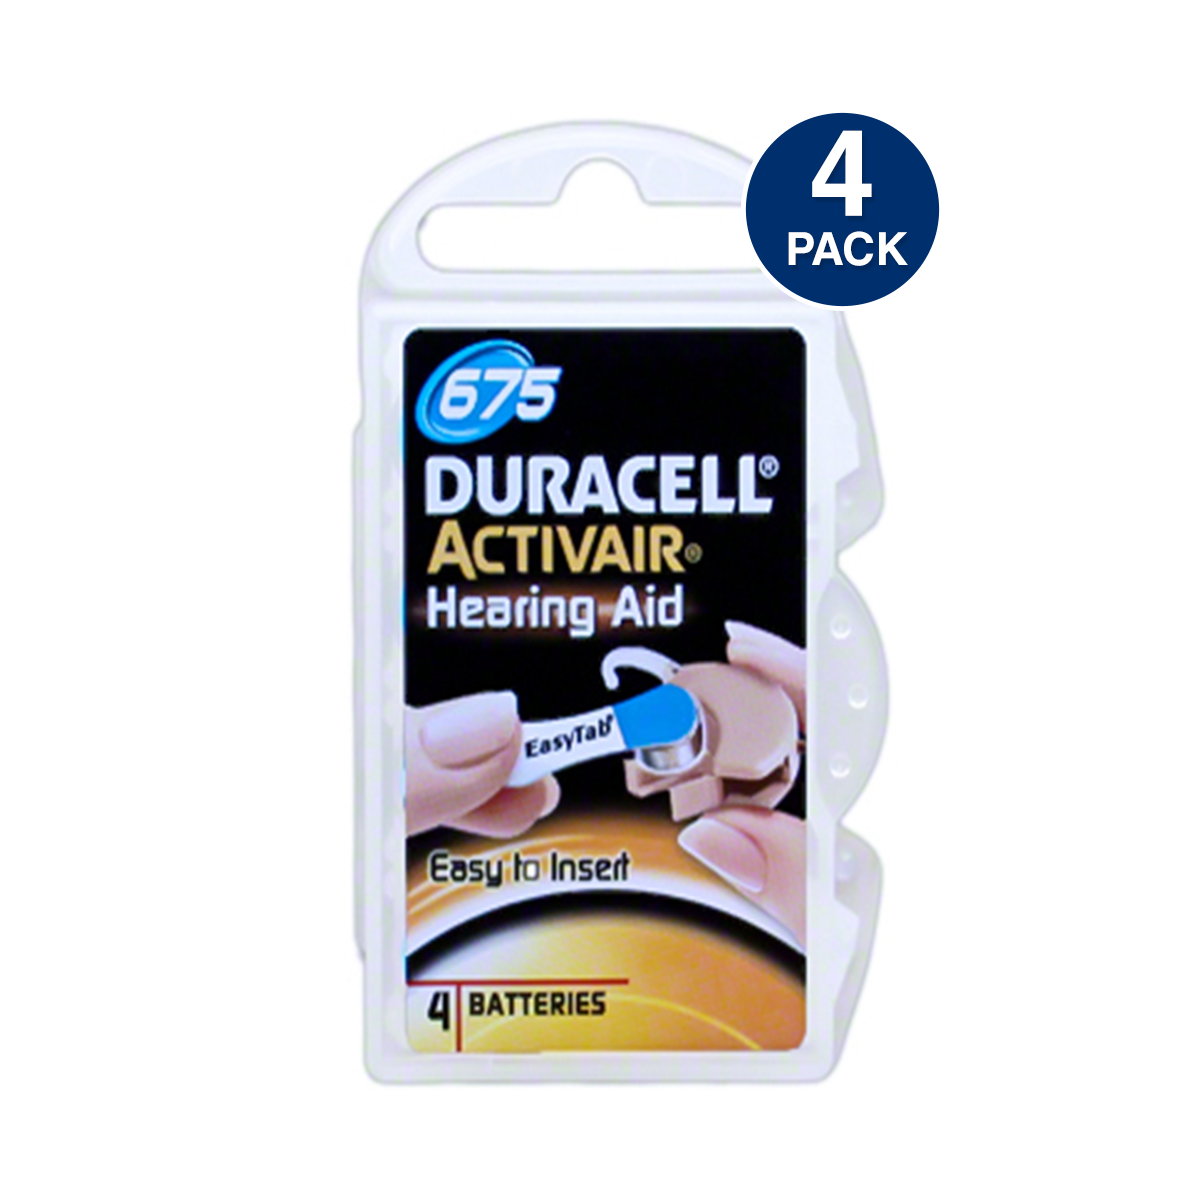 Duracell Activair 675 Hearing Aid Battery (4 PCS)